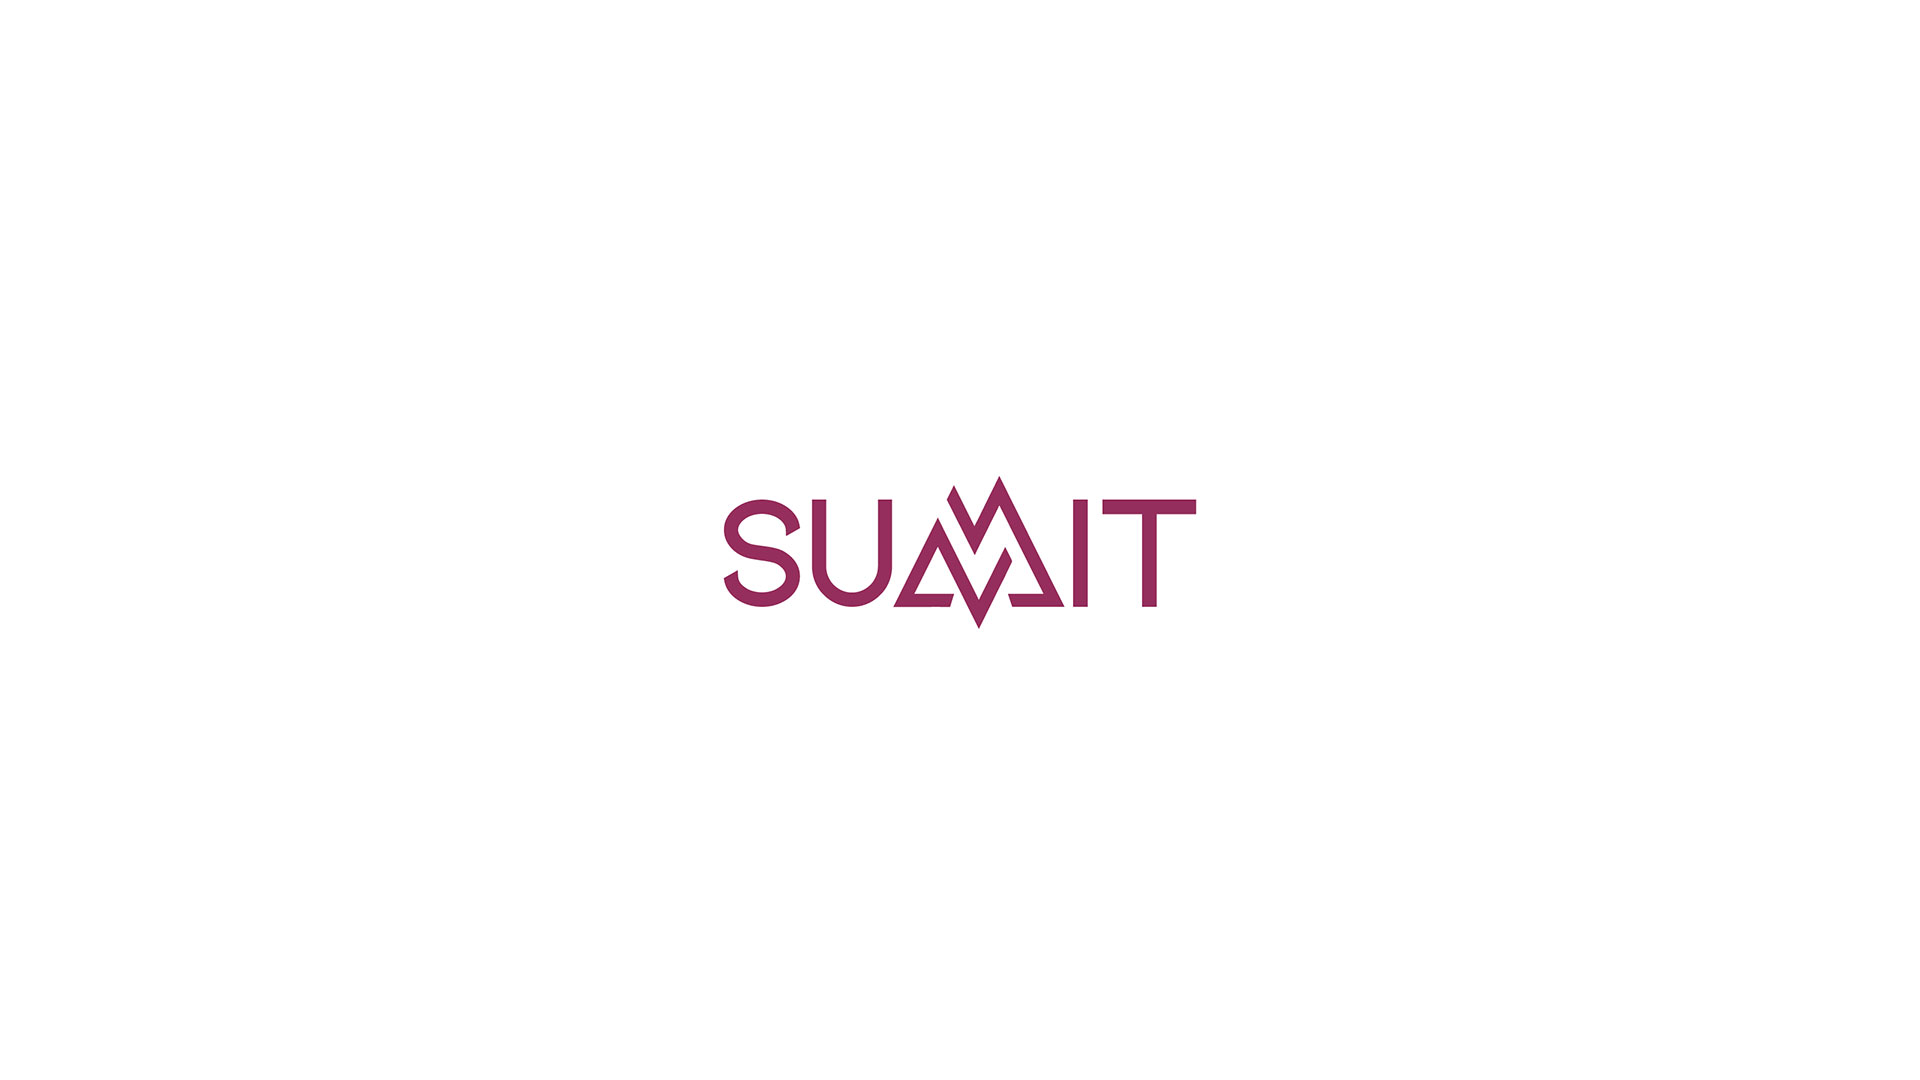 Builtech Summit Logo Design on white background